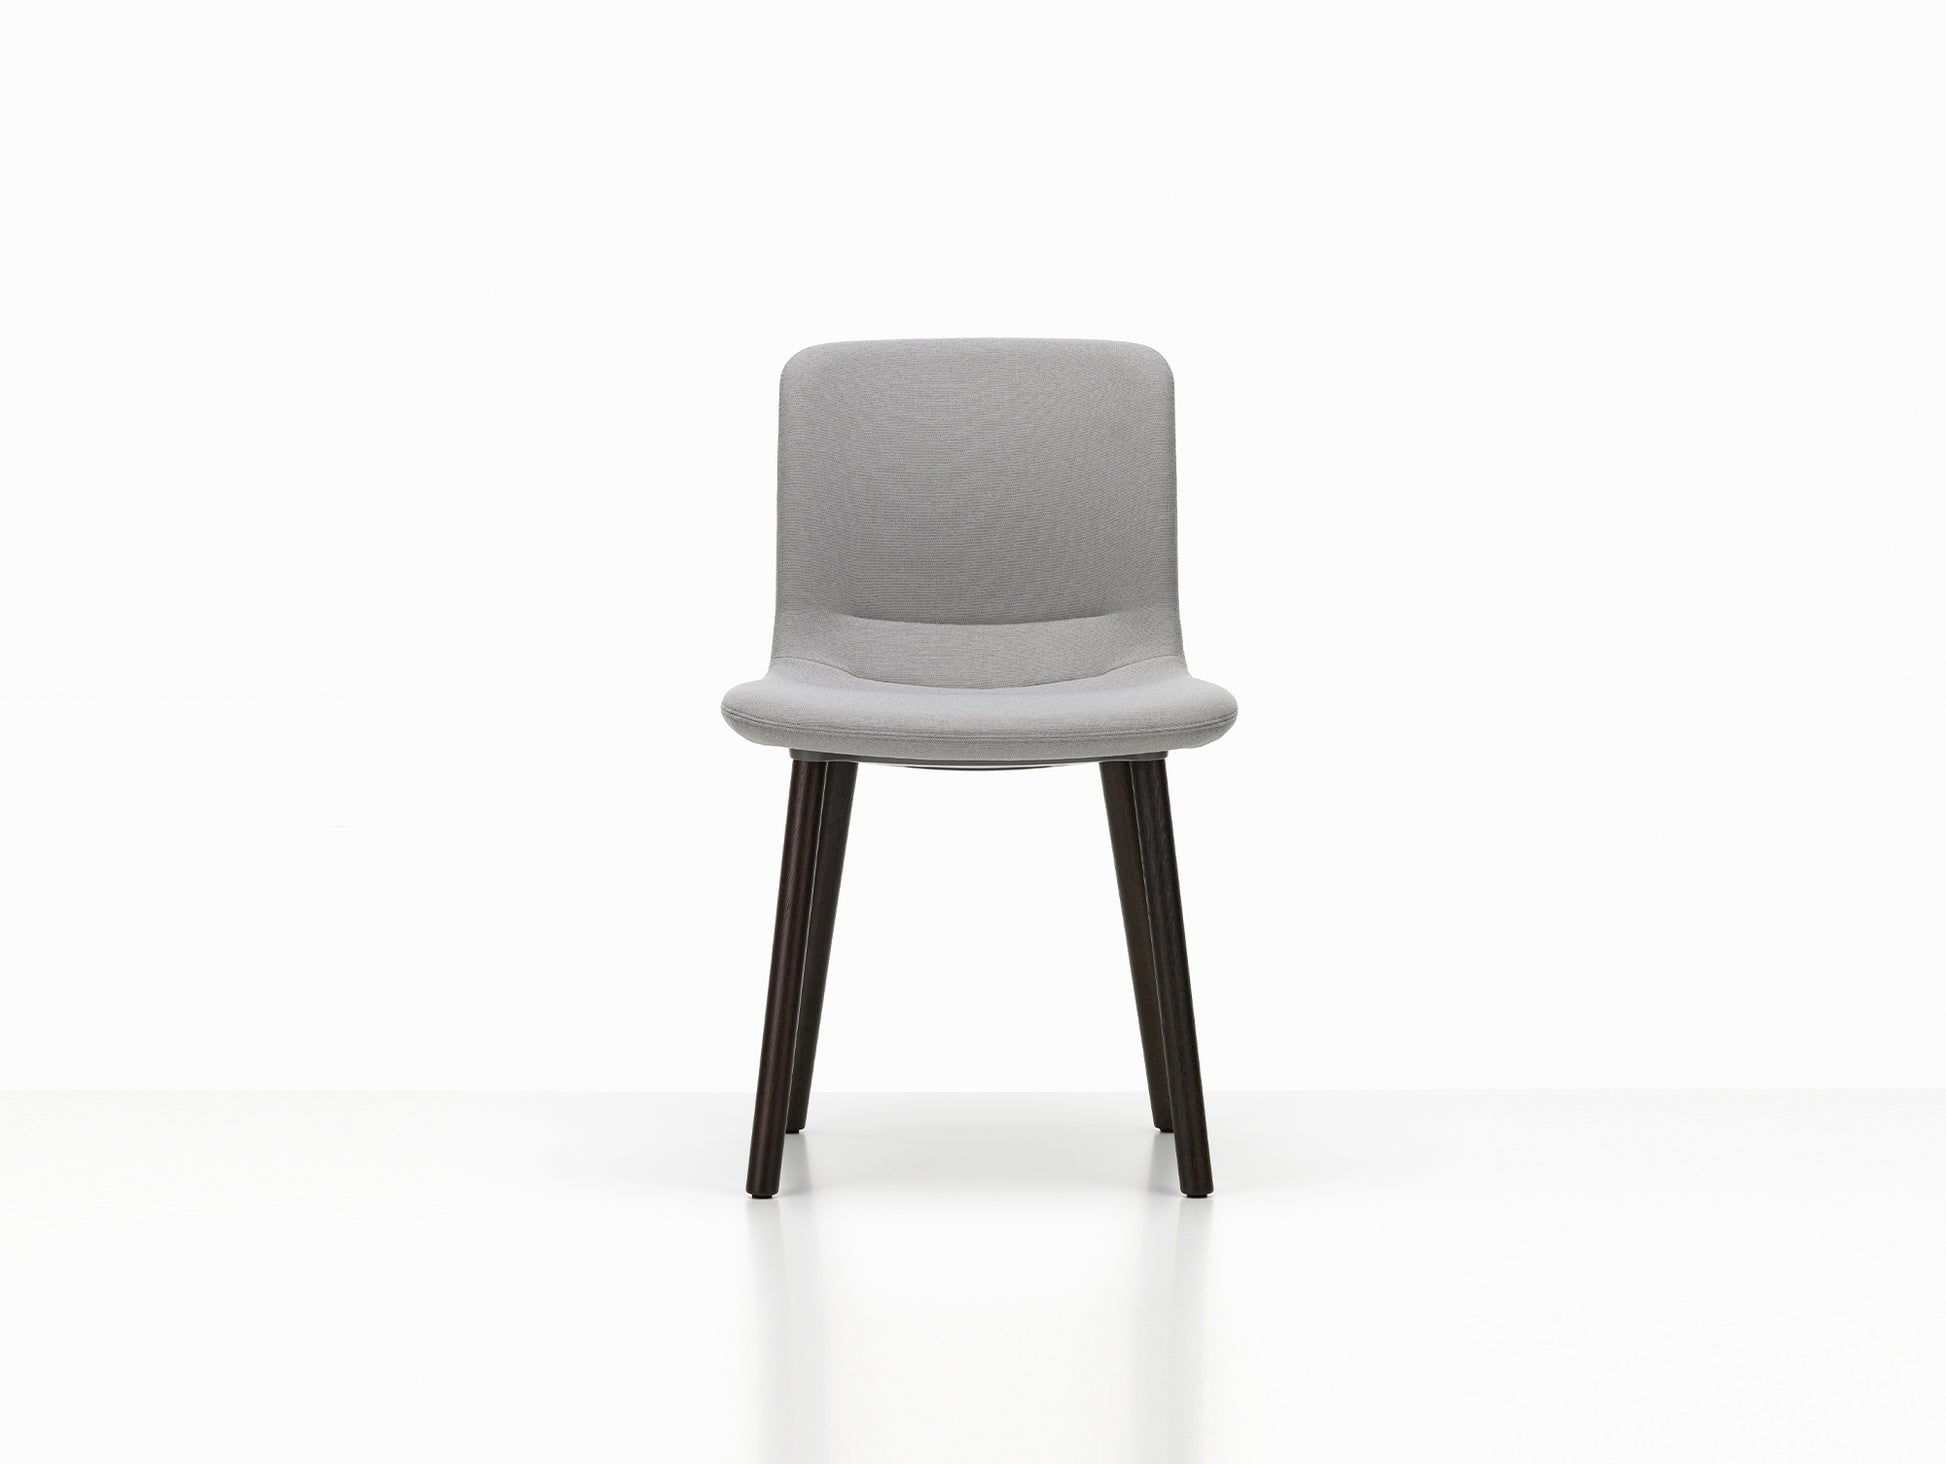 HAL Soft Wood Chair by Vitra - Dark Stained Oak Base - Plano 05 Cream White / Sierra Grey (F30)